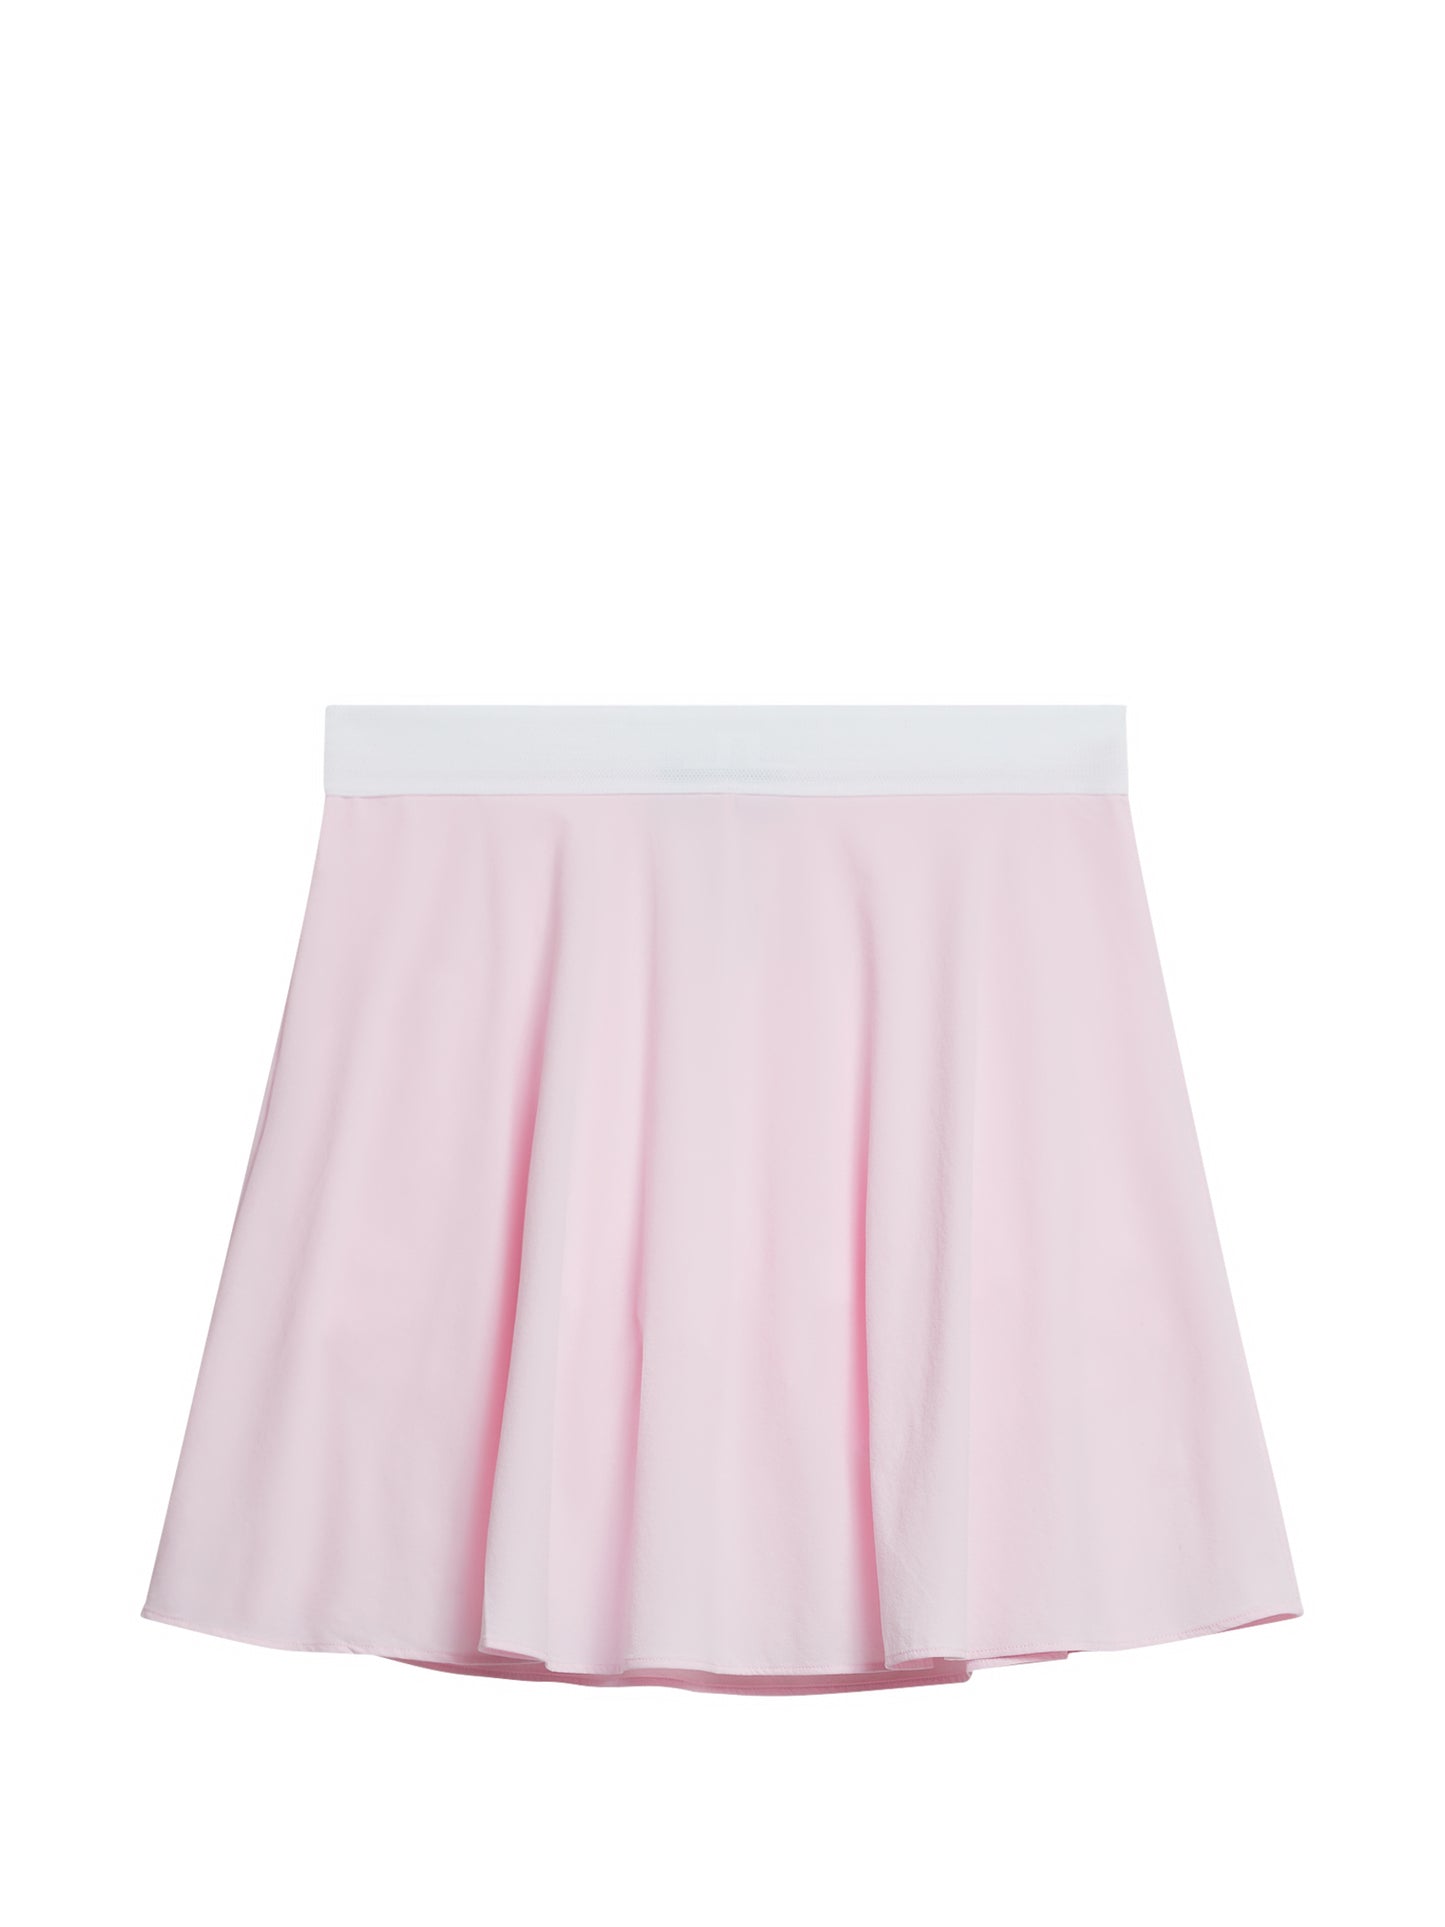 Mimi Skirt / Cherry Blossom